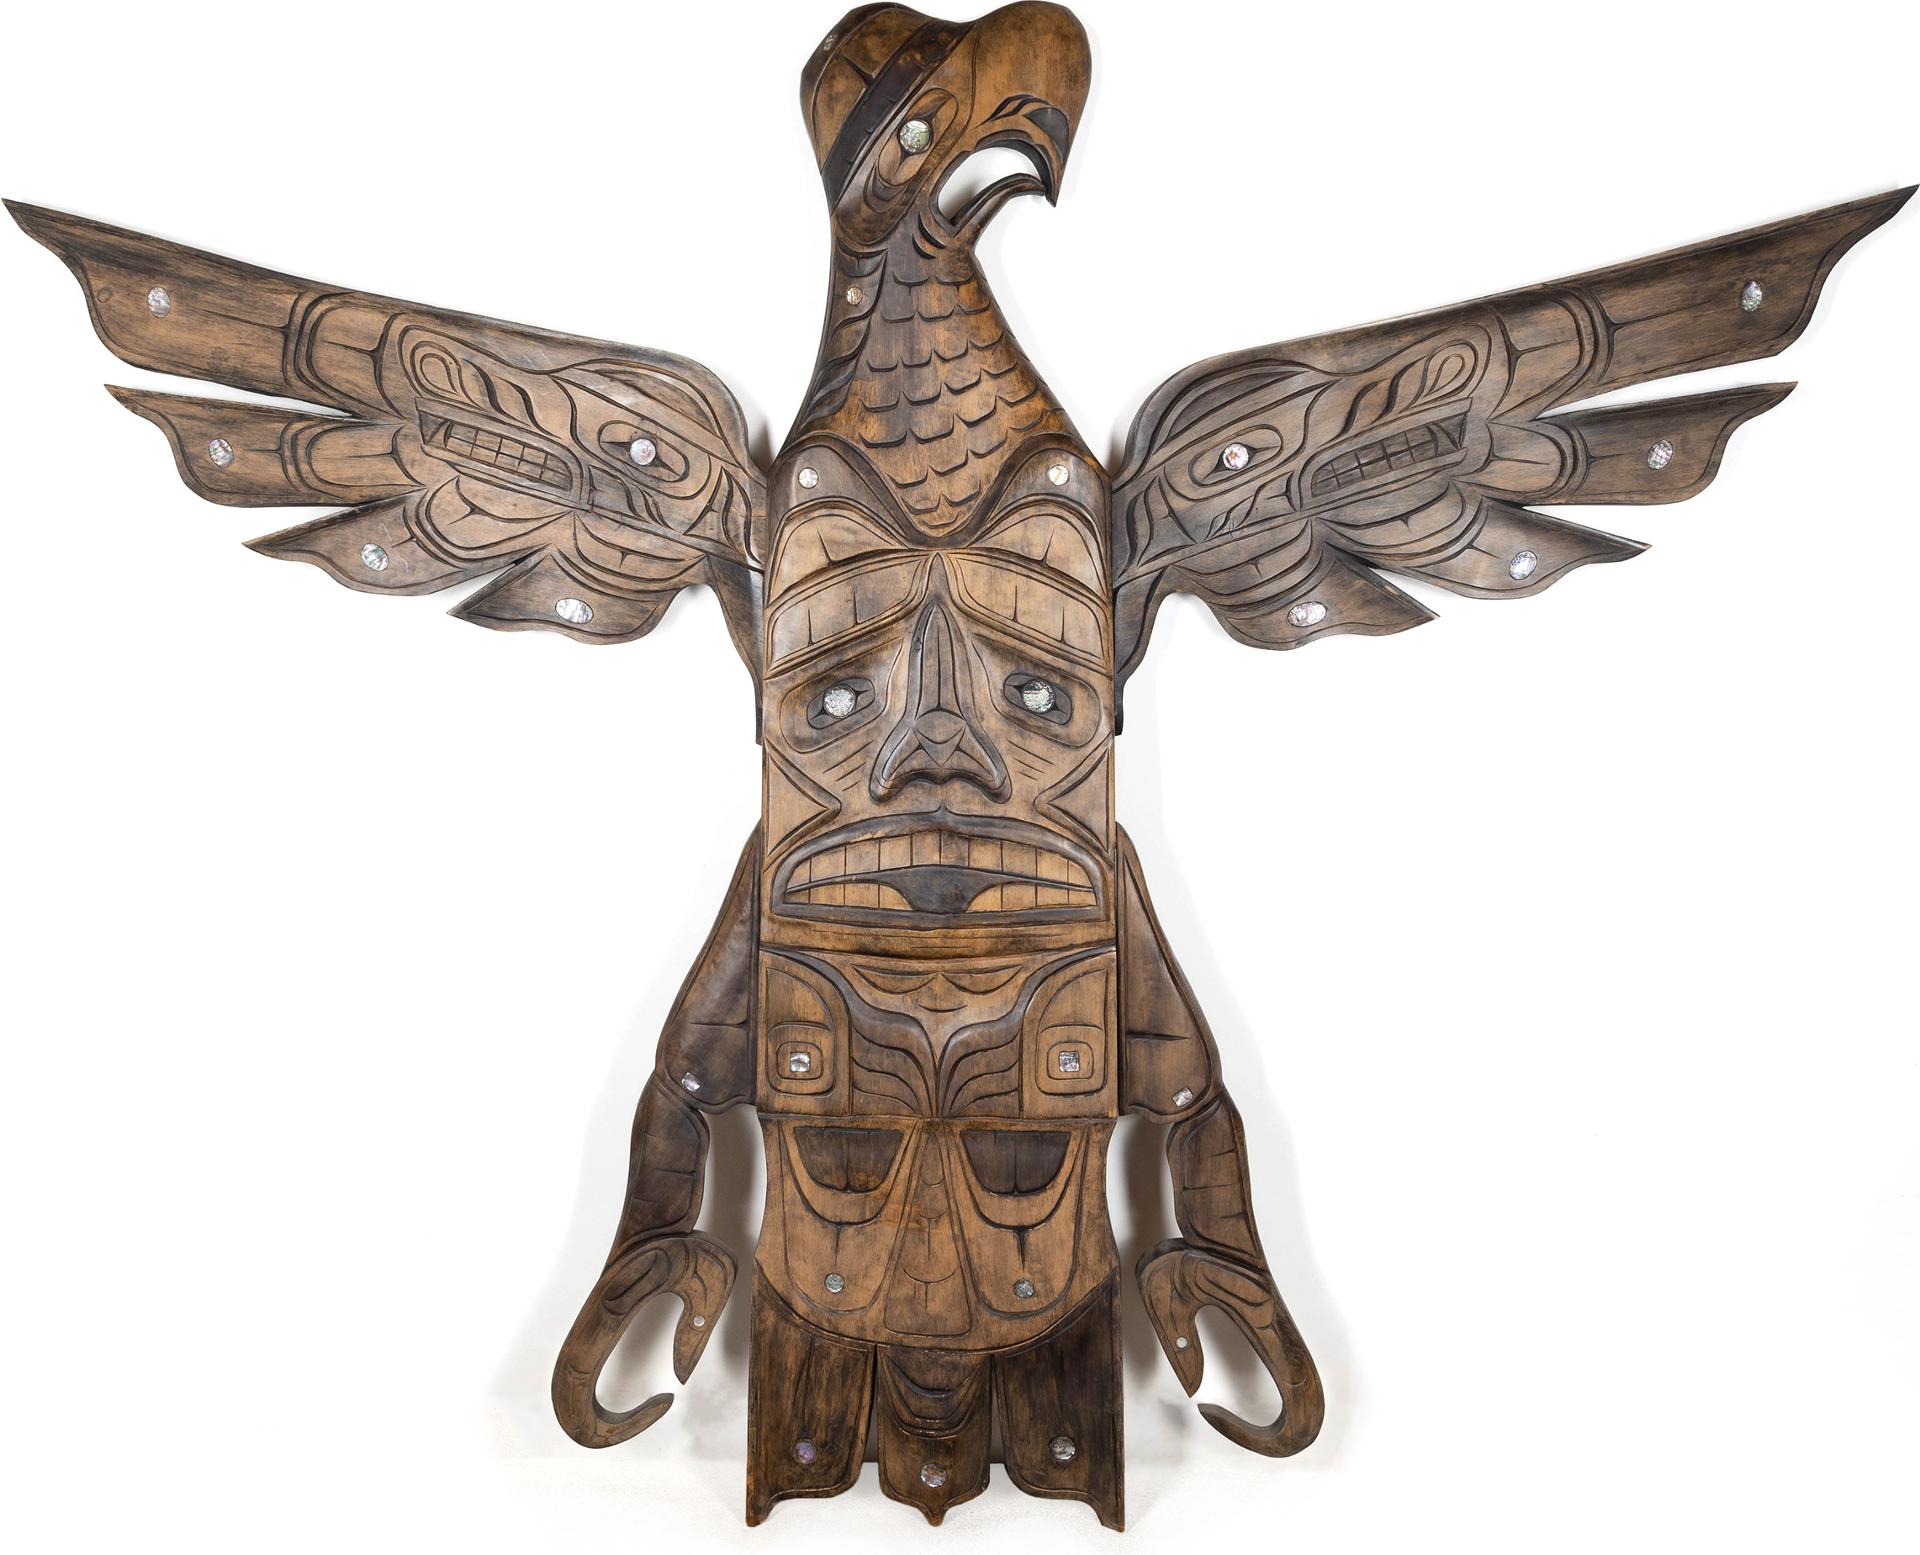 George Nookemus - Large Thunderbird Carving